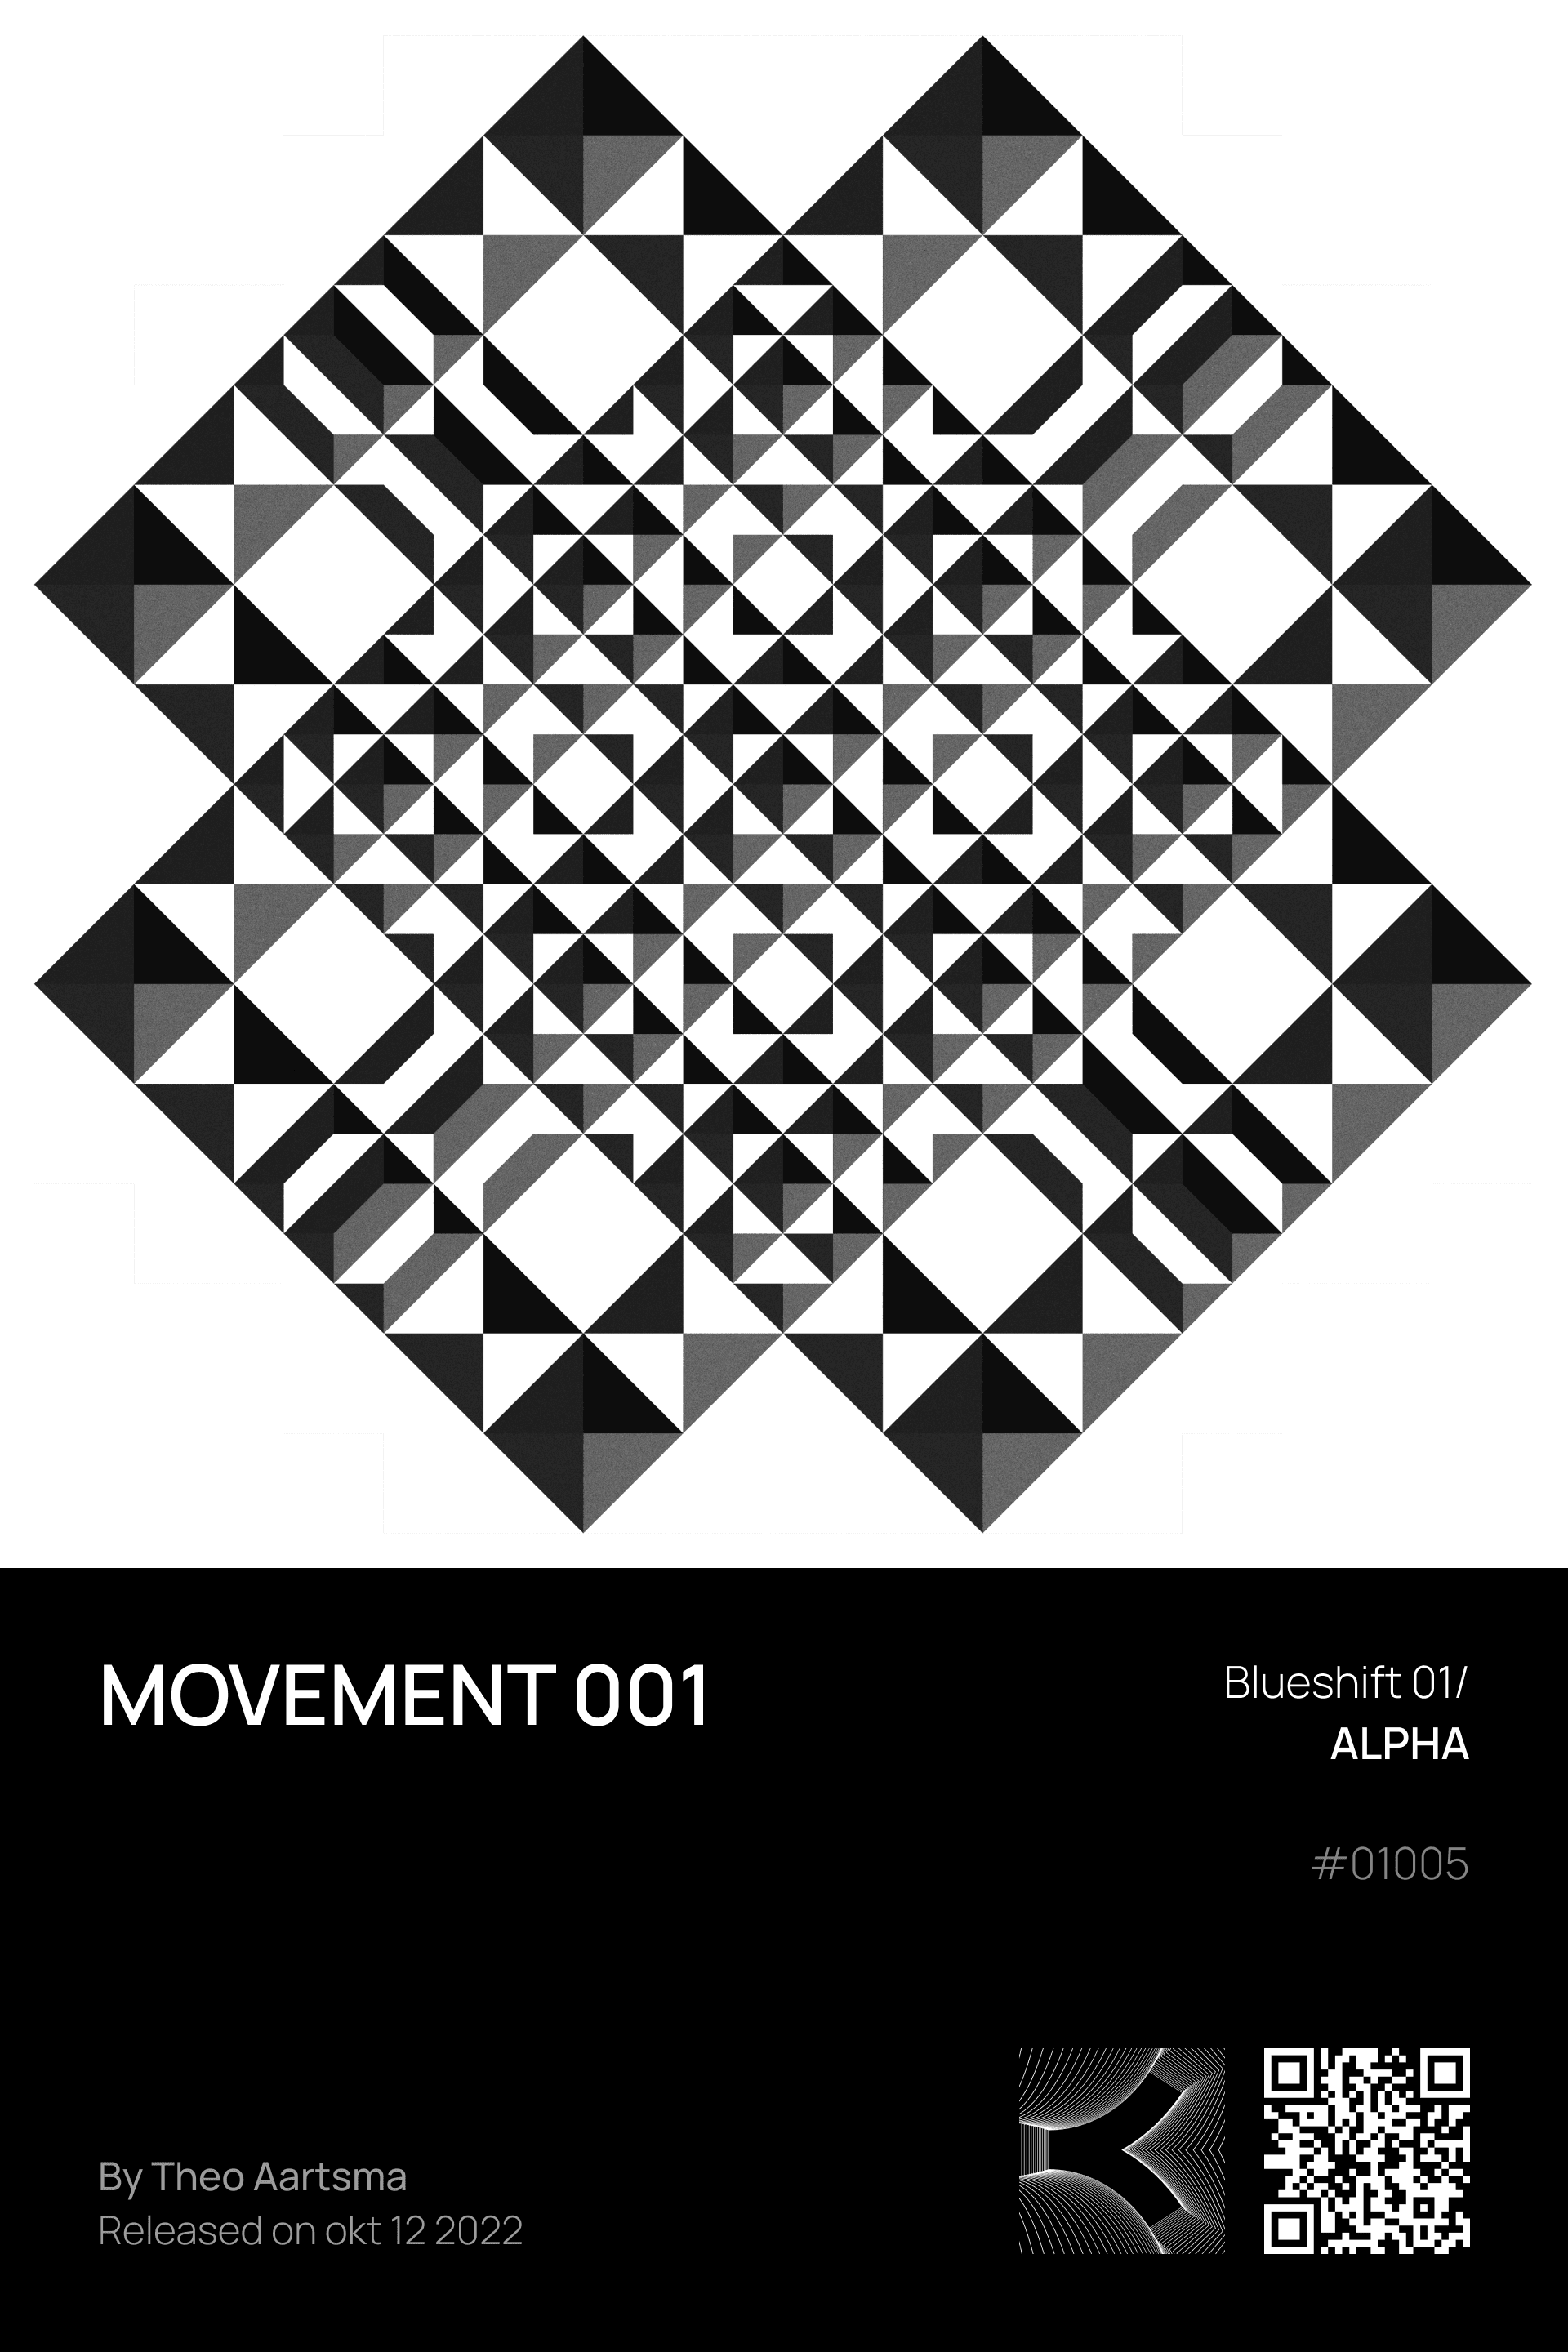 Movement 001